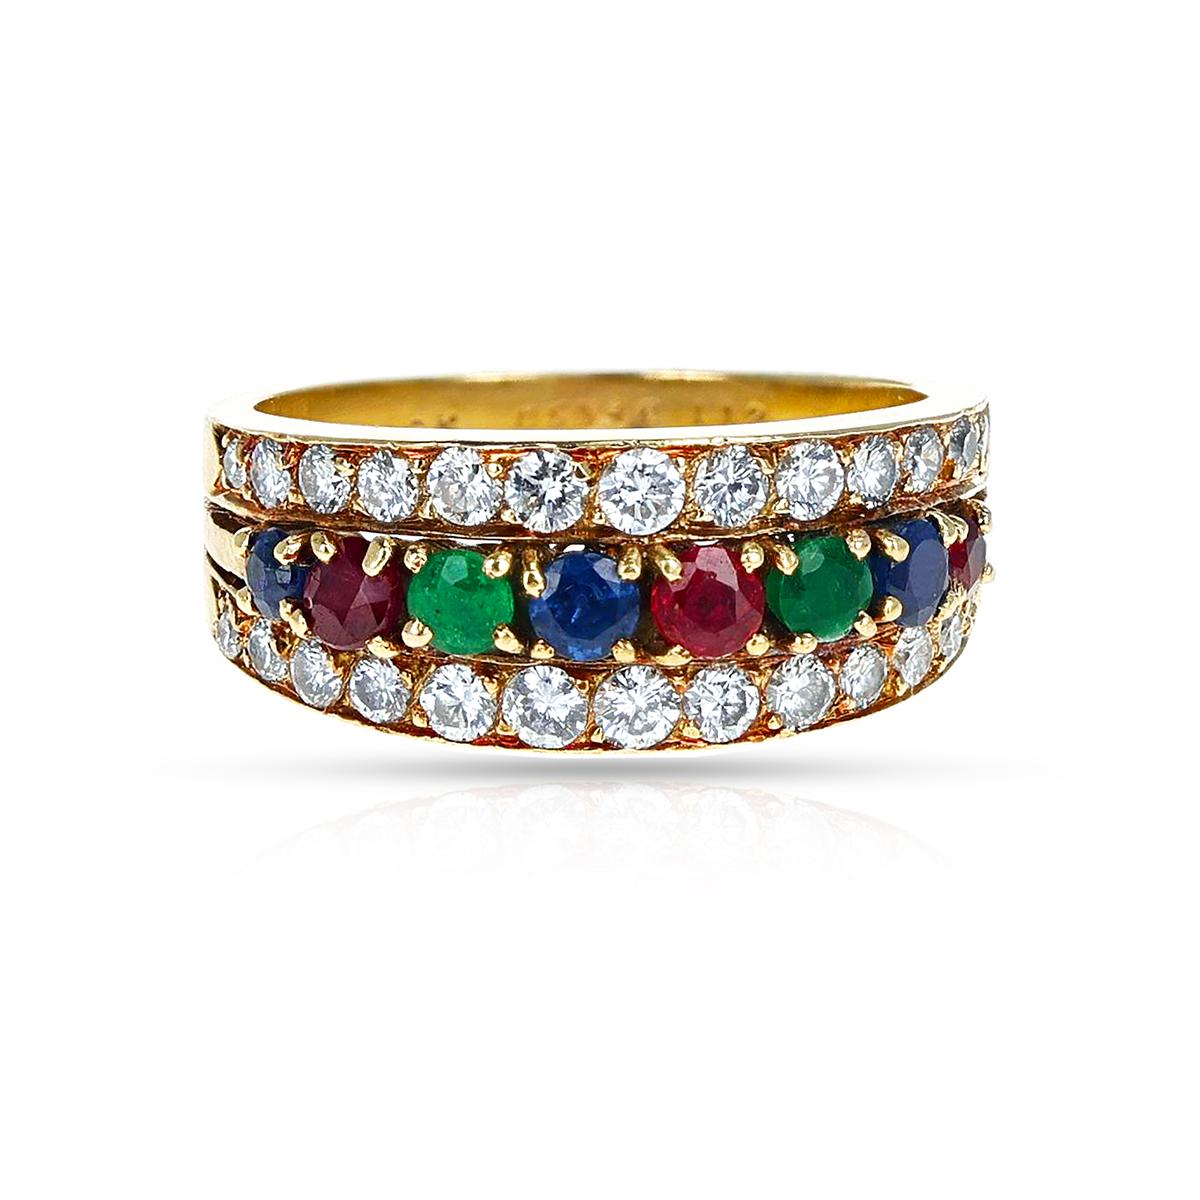 Women's or Men's Van Cleef & Arpels Ruby, Emerald, Sapphire and Diamond Ring, 18k